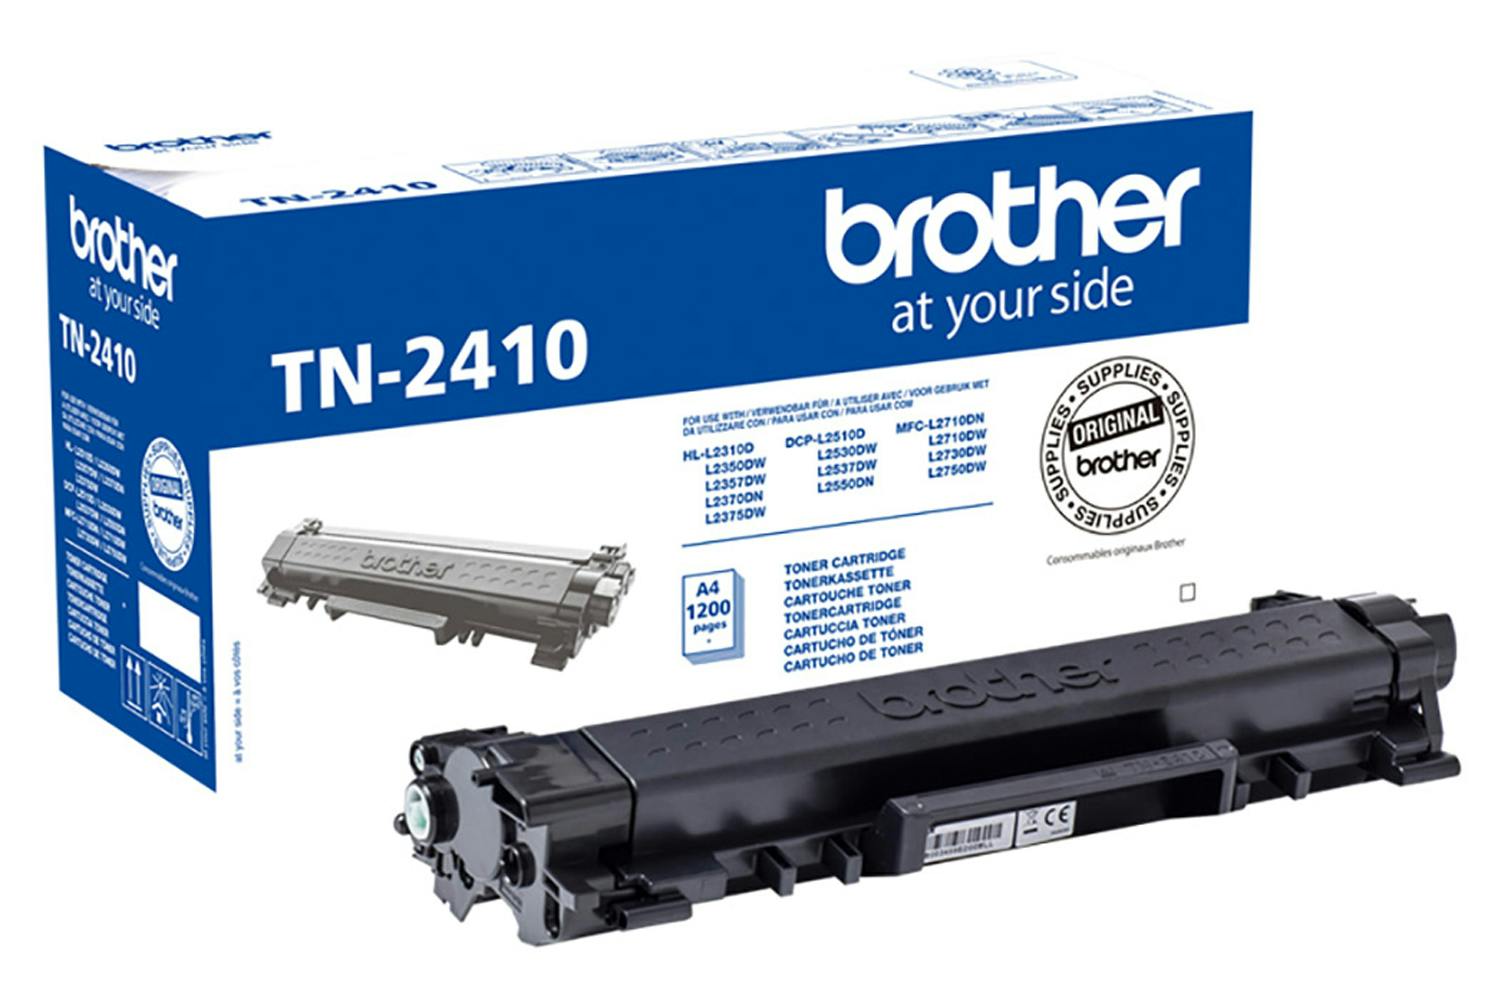 Brother TN-2410 Toner Cartridge | Black